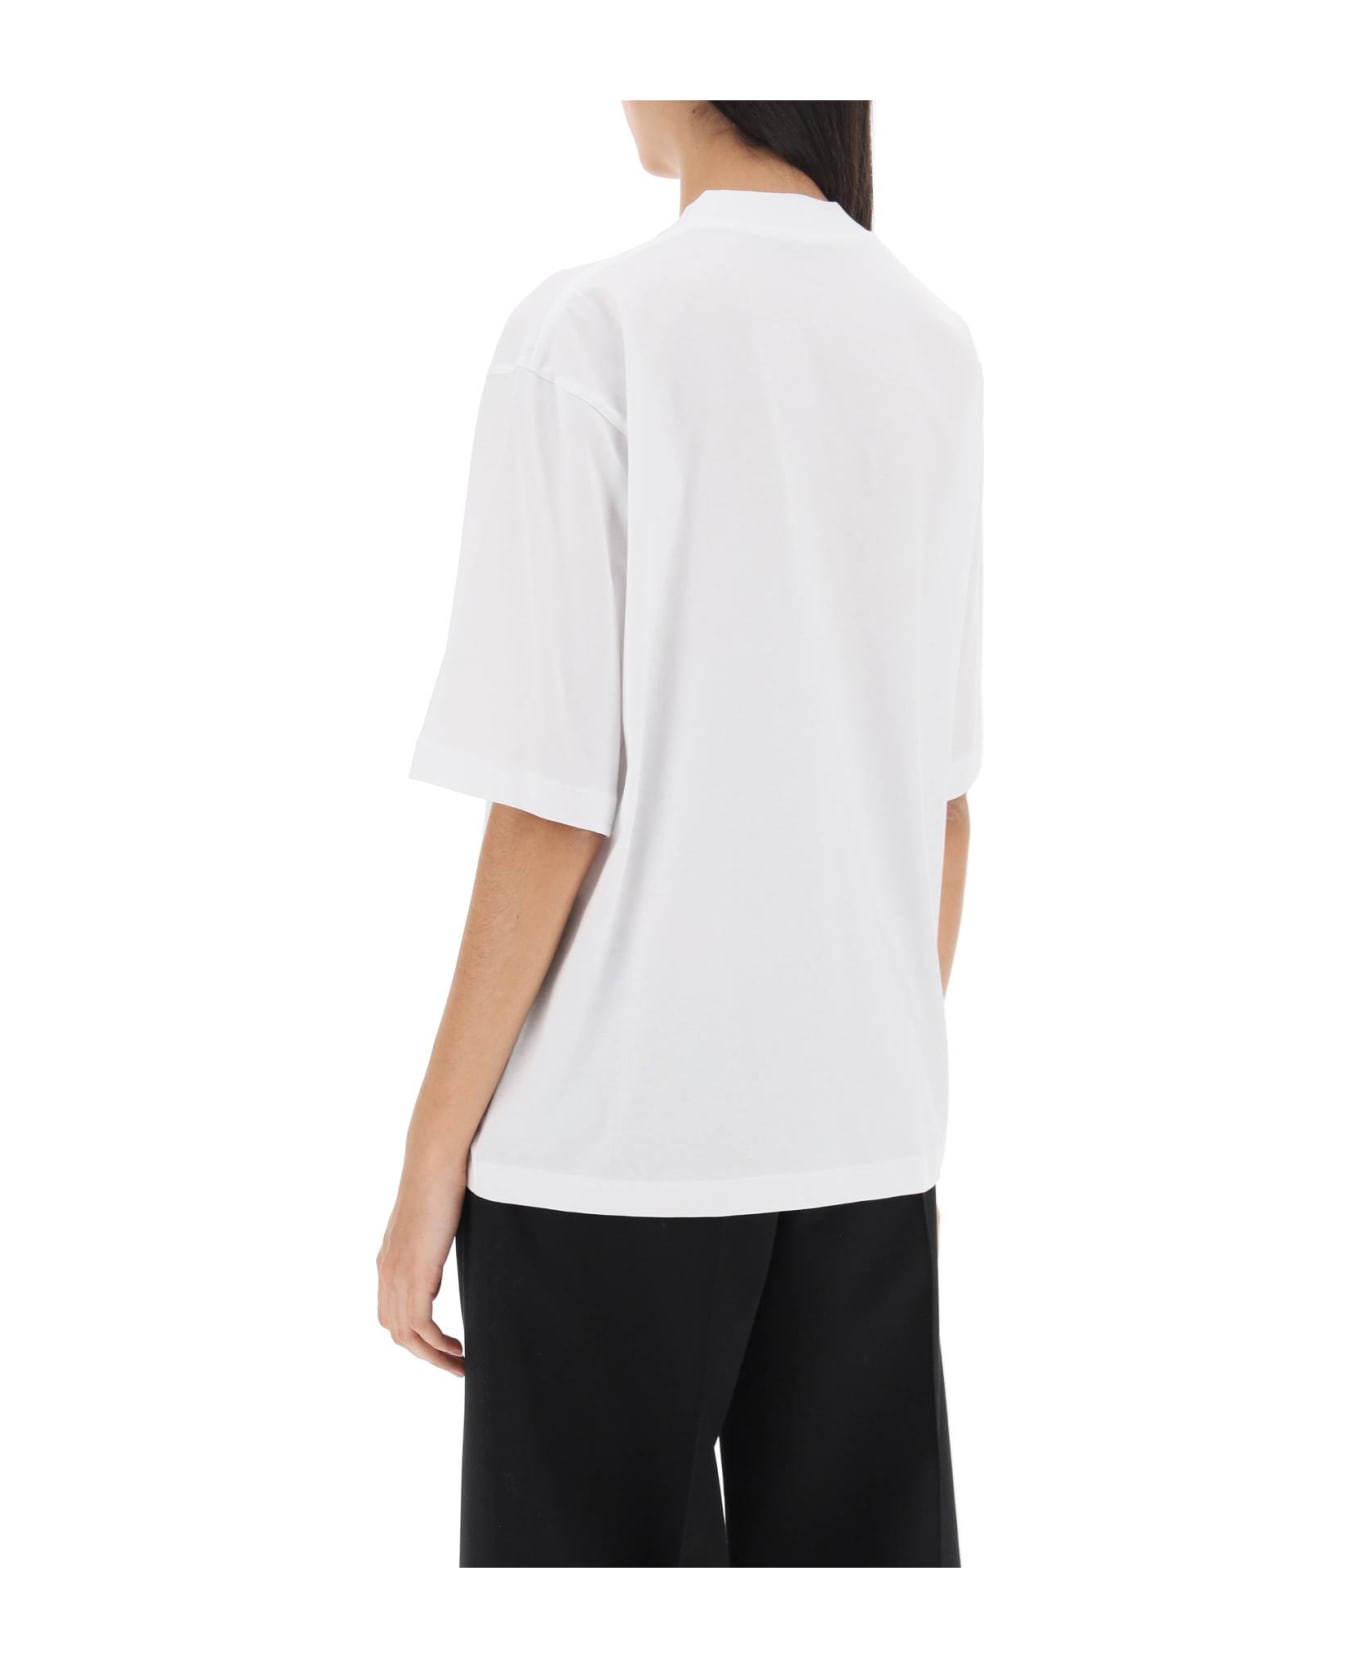 Marni Regular Chest Logo T-shirt - White Tシャツ